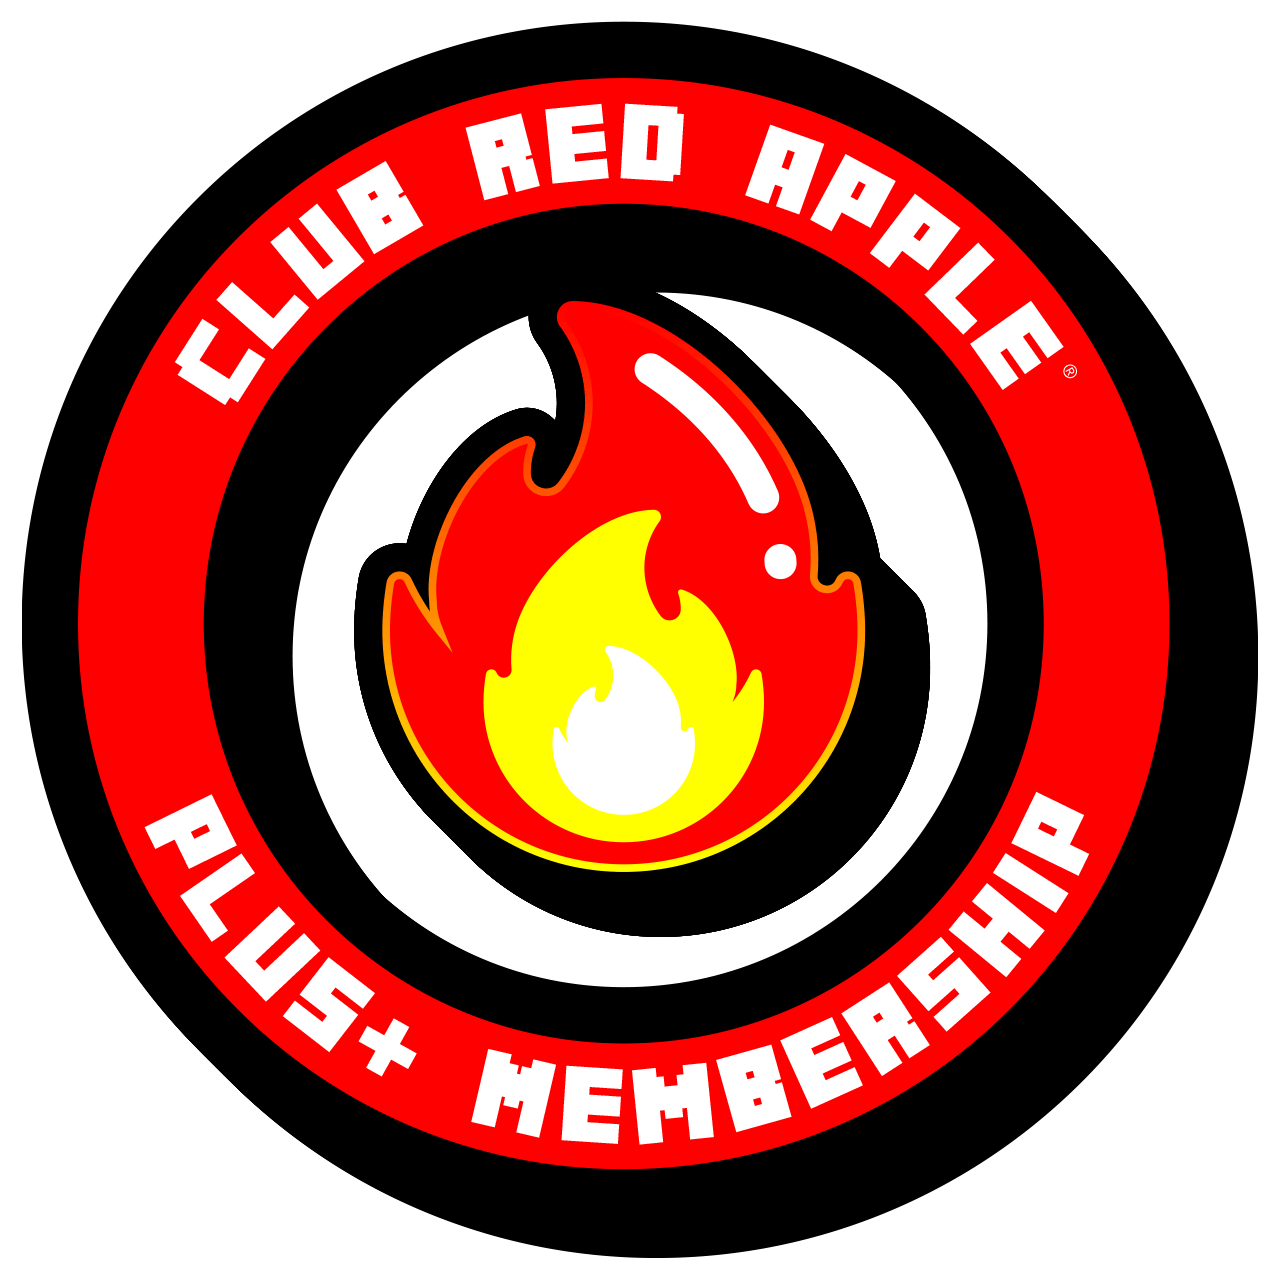 Club Red Apple Plus+ Membership